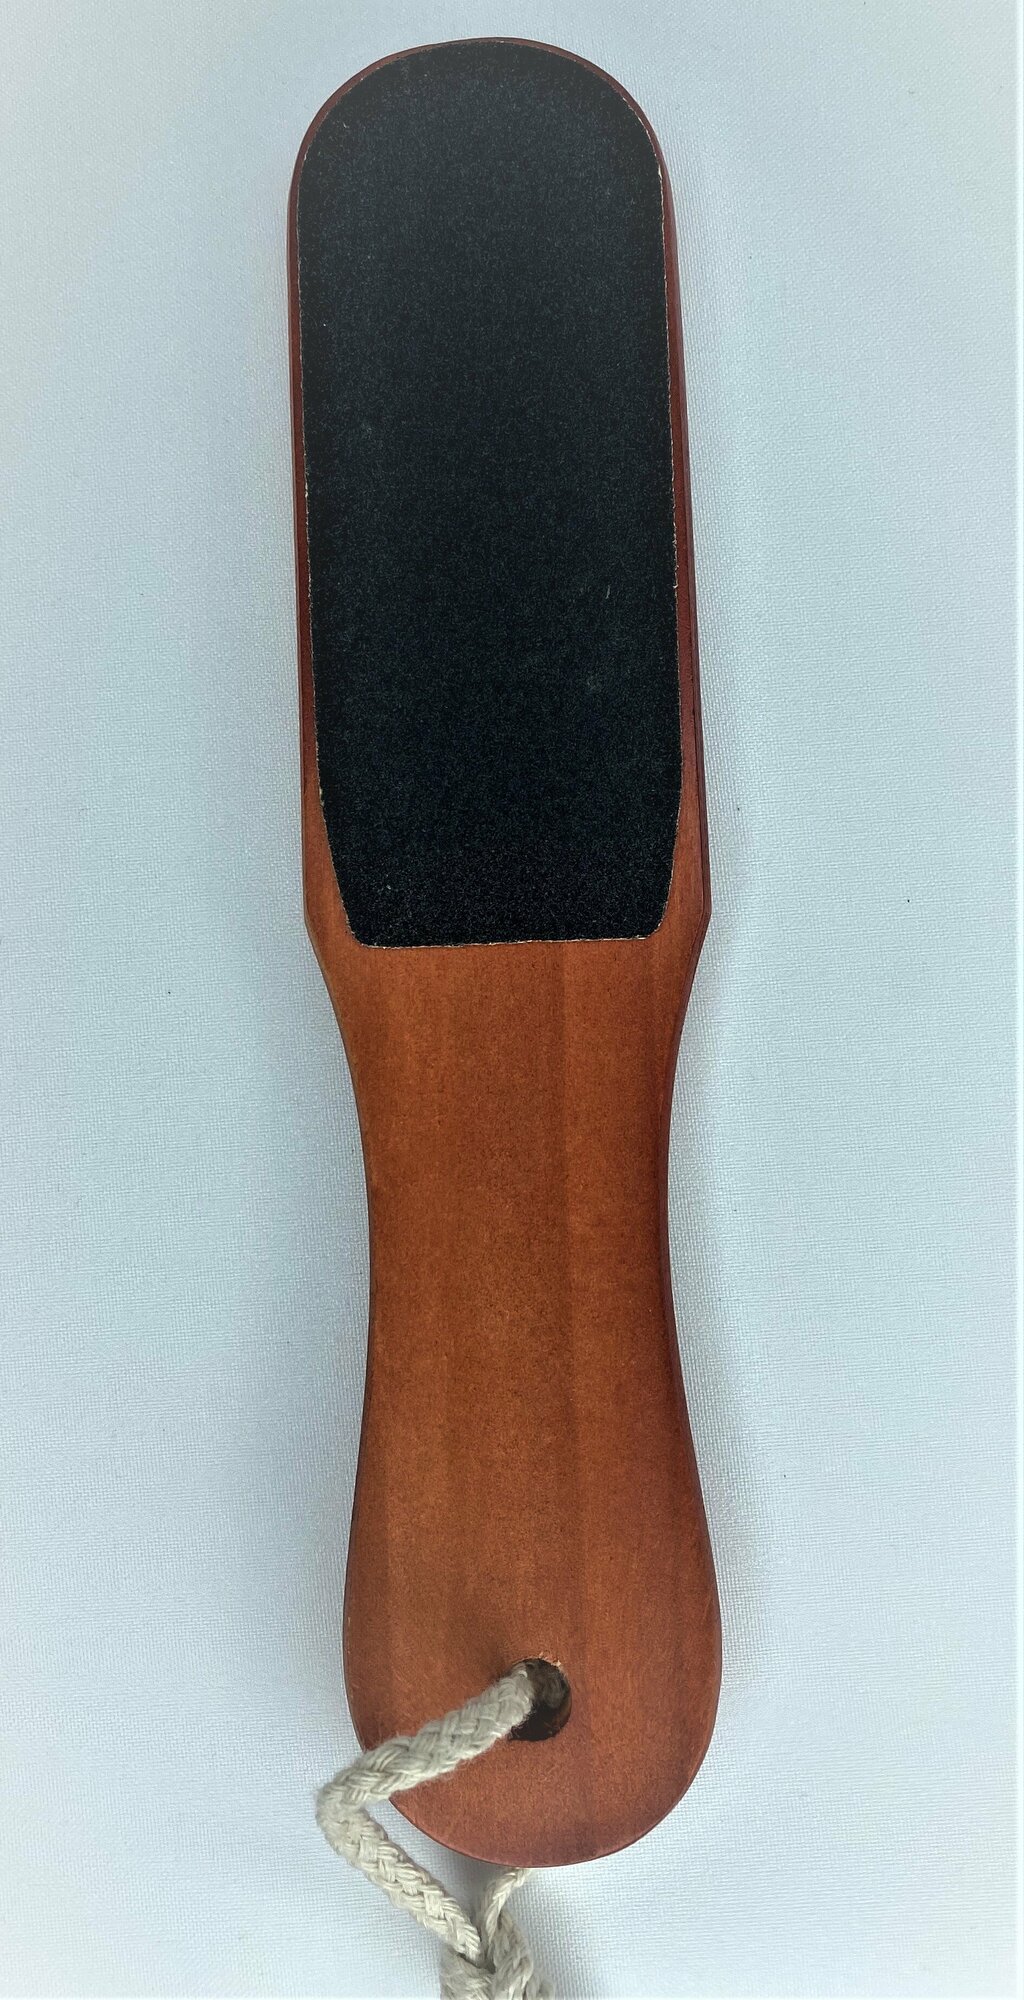 Терка для ног деревянная двухсторонняя, размер 2*5.5*1см